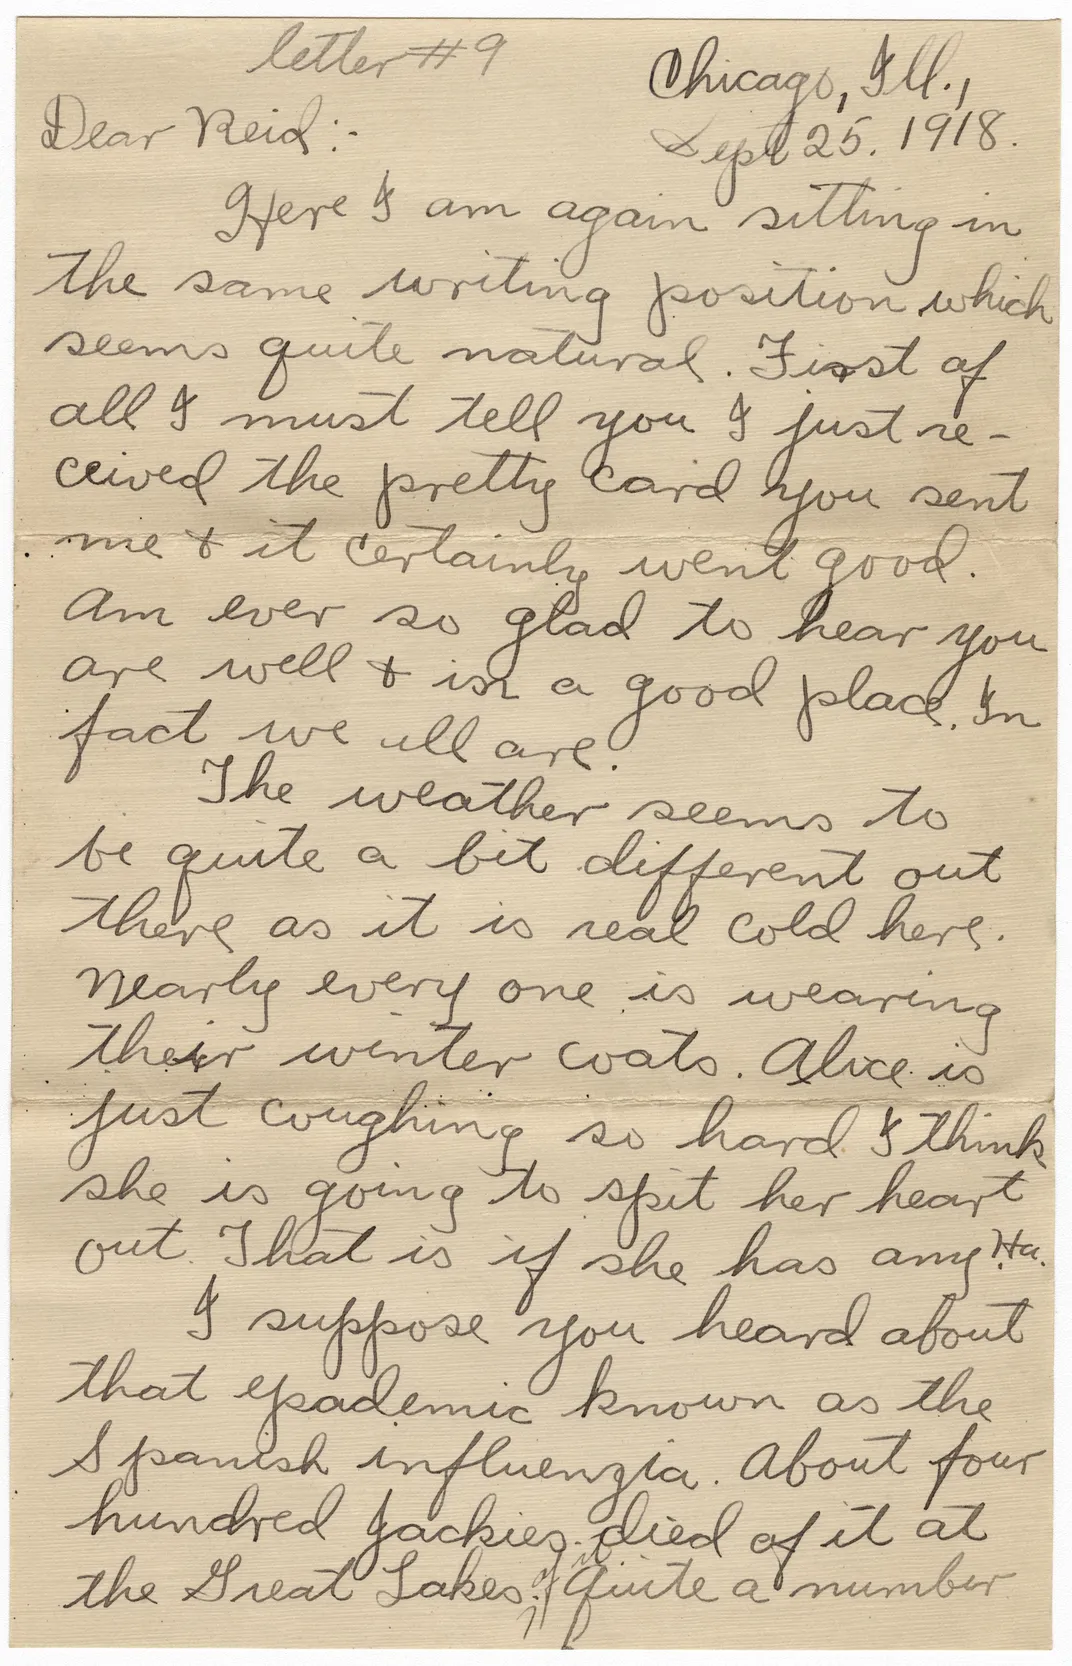 Clara Wrasse letter